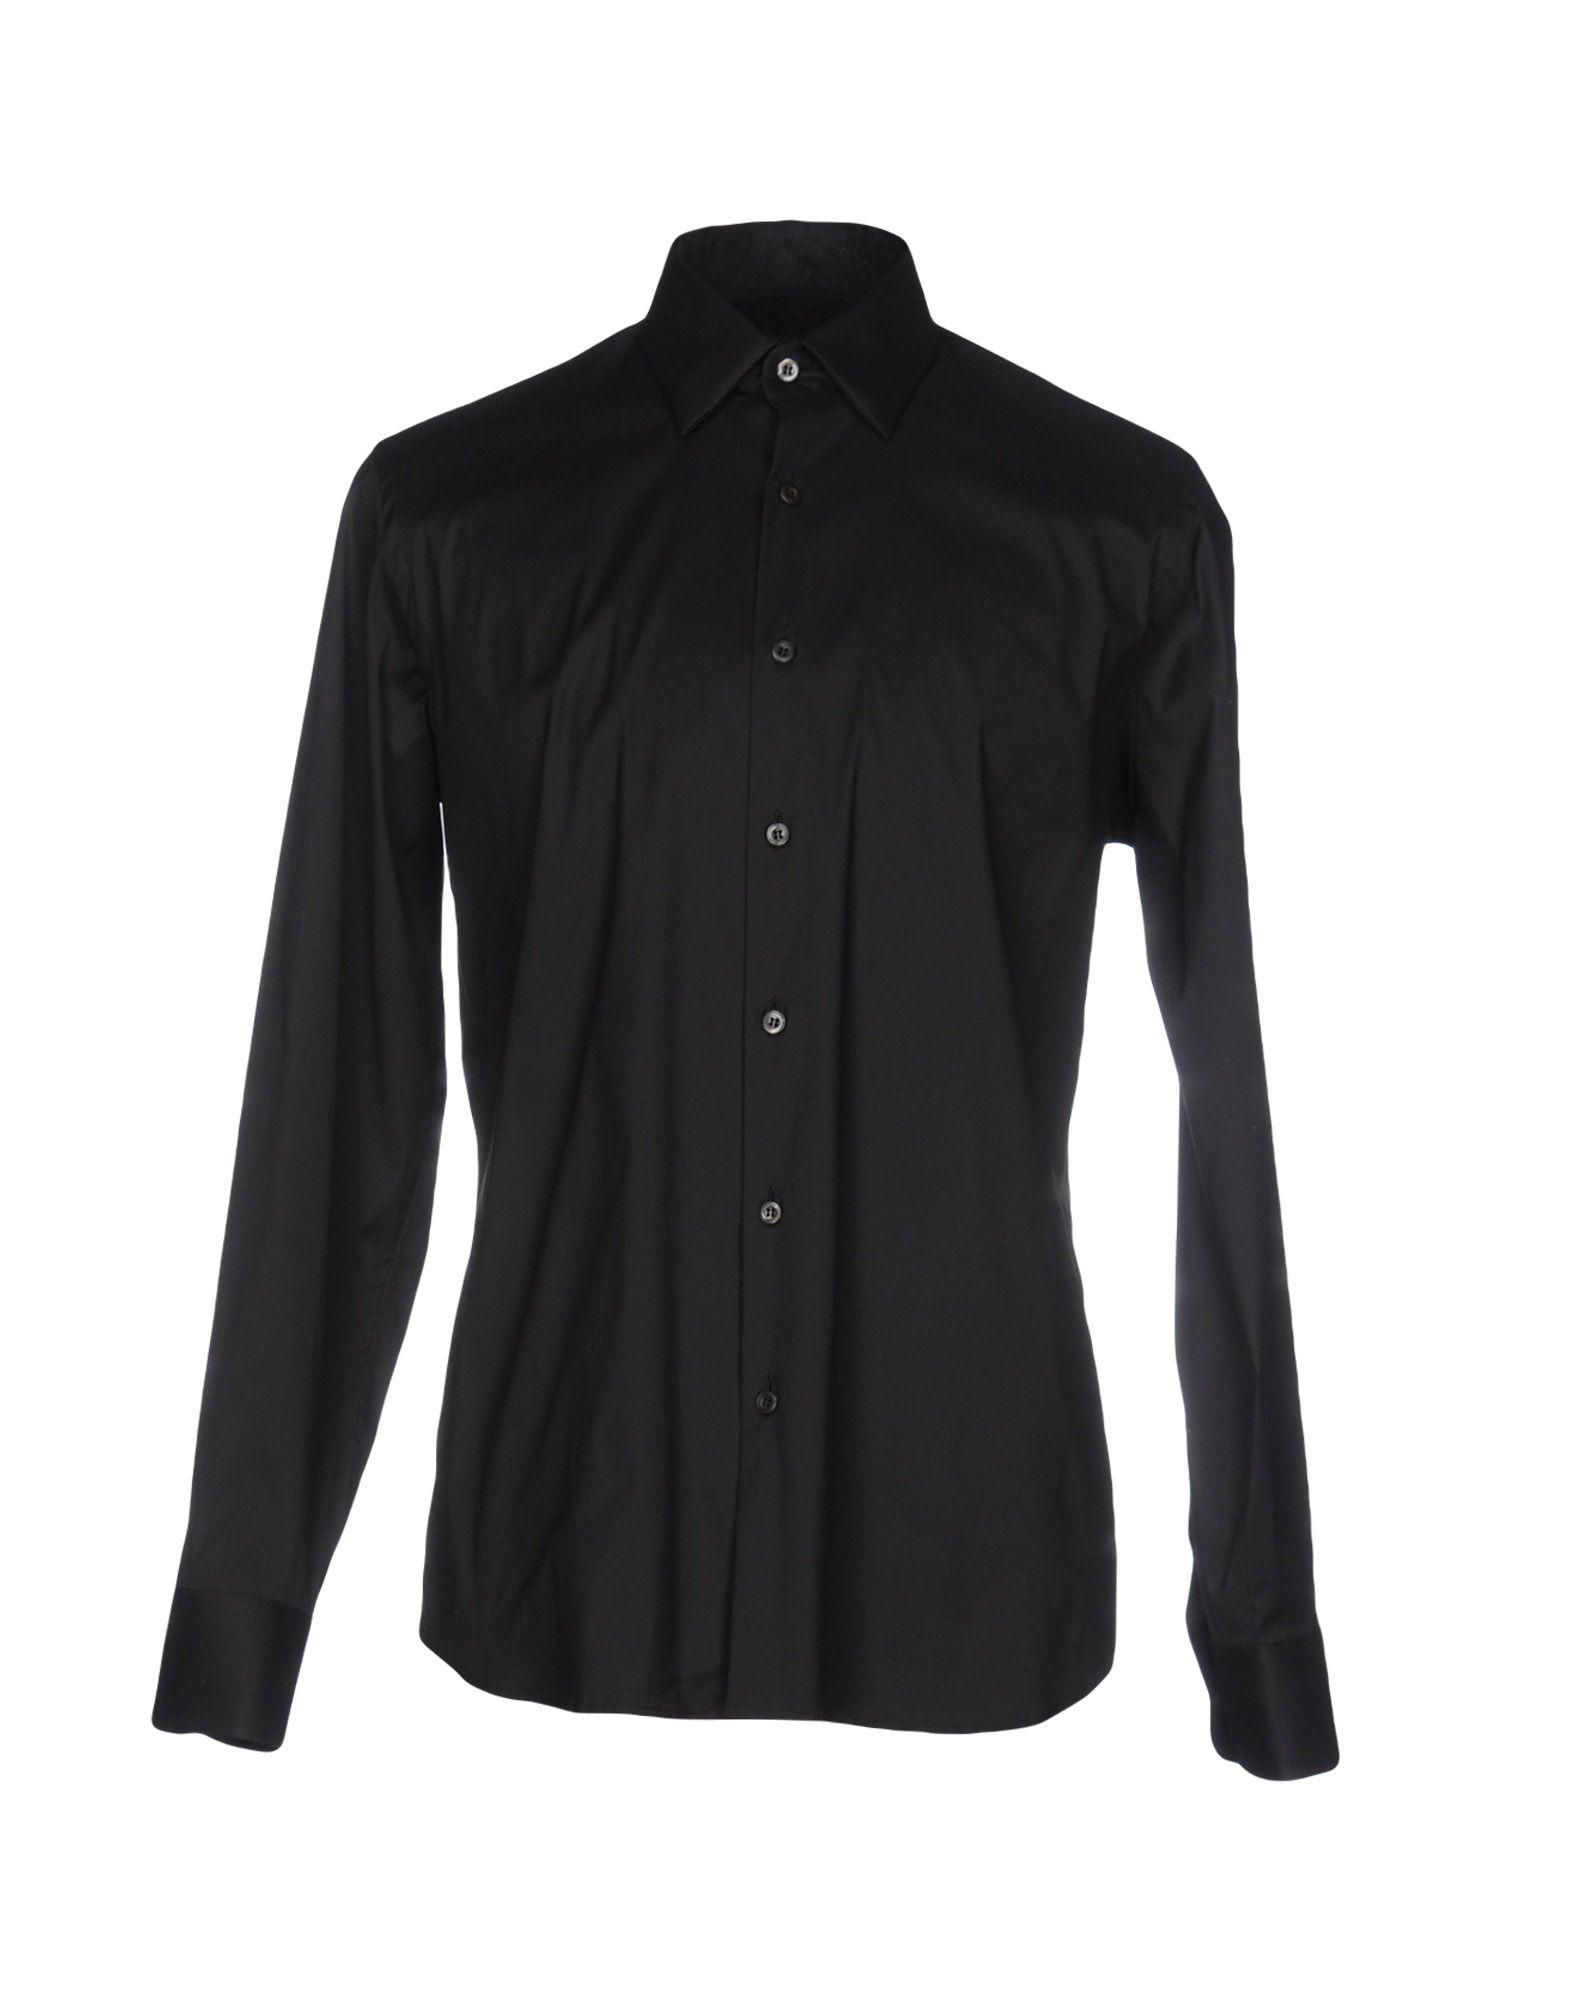 Prada Cotton Shirt in Black for Men - Lyst